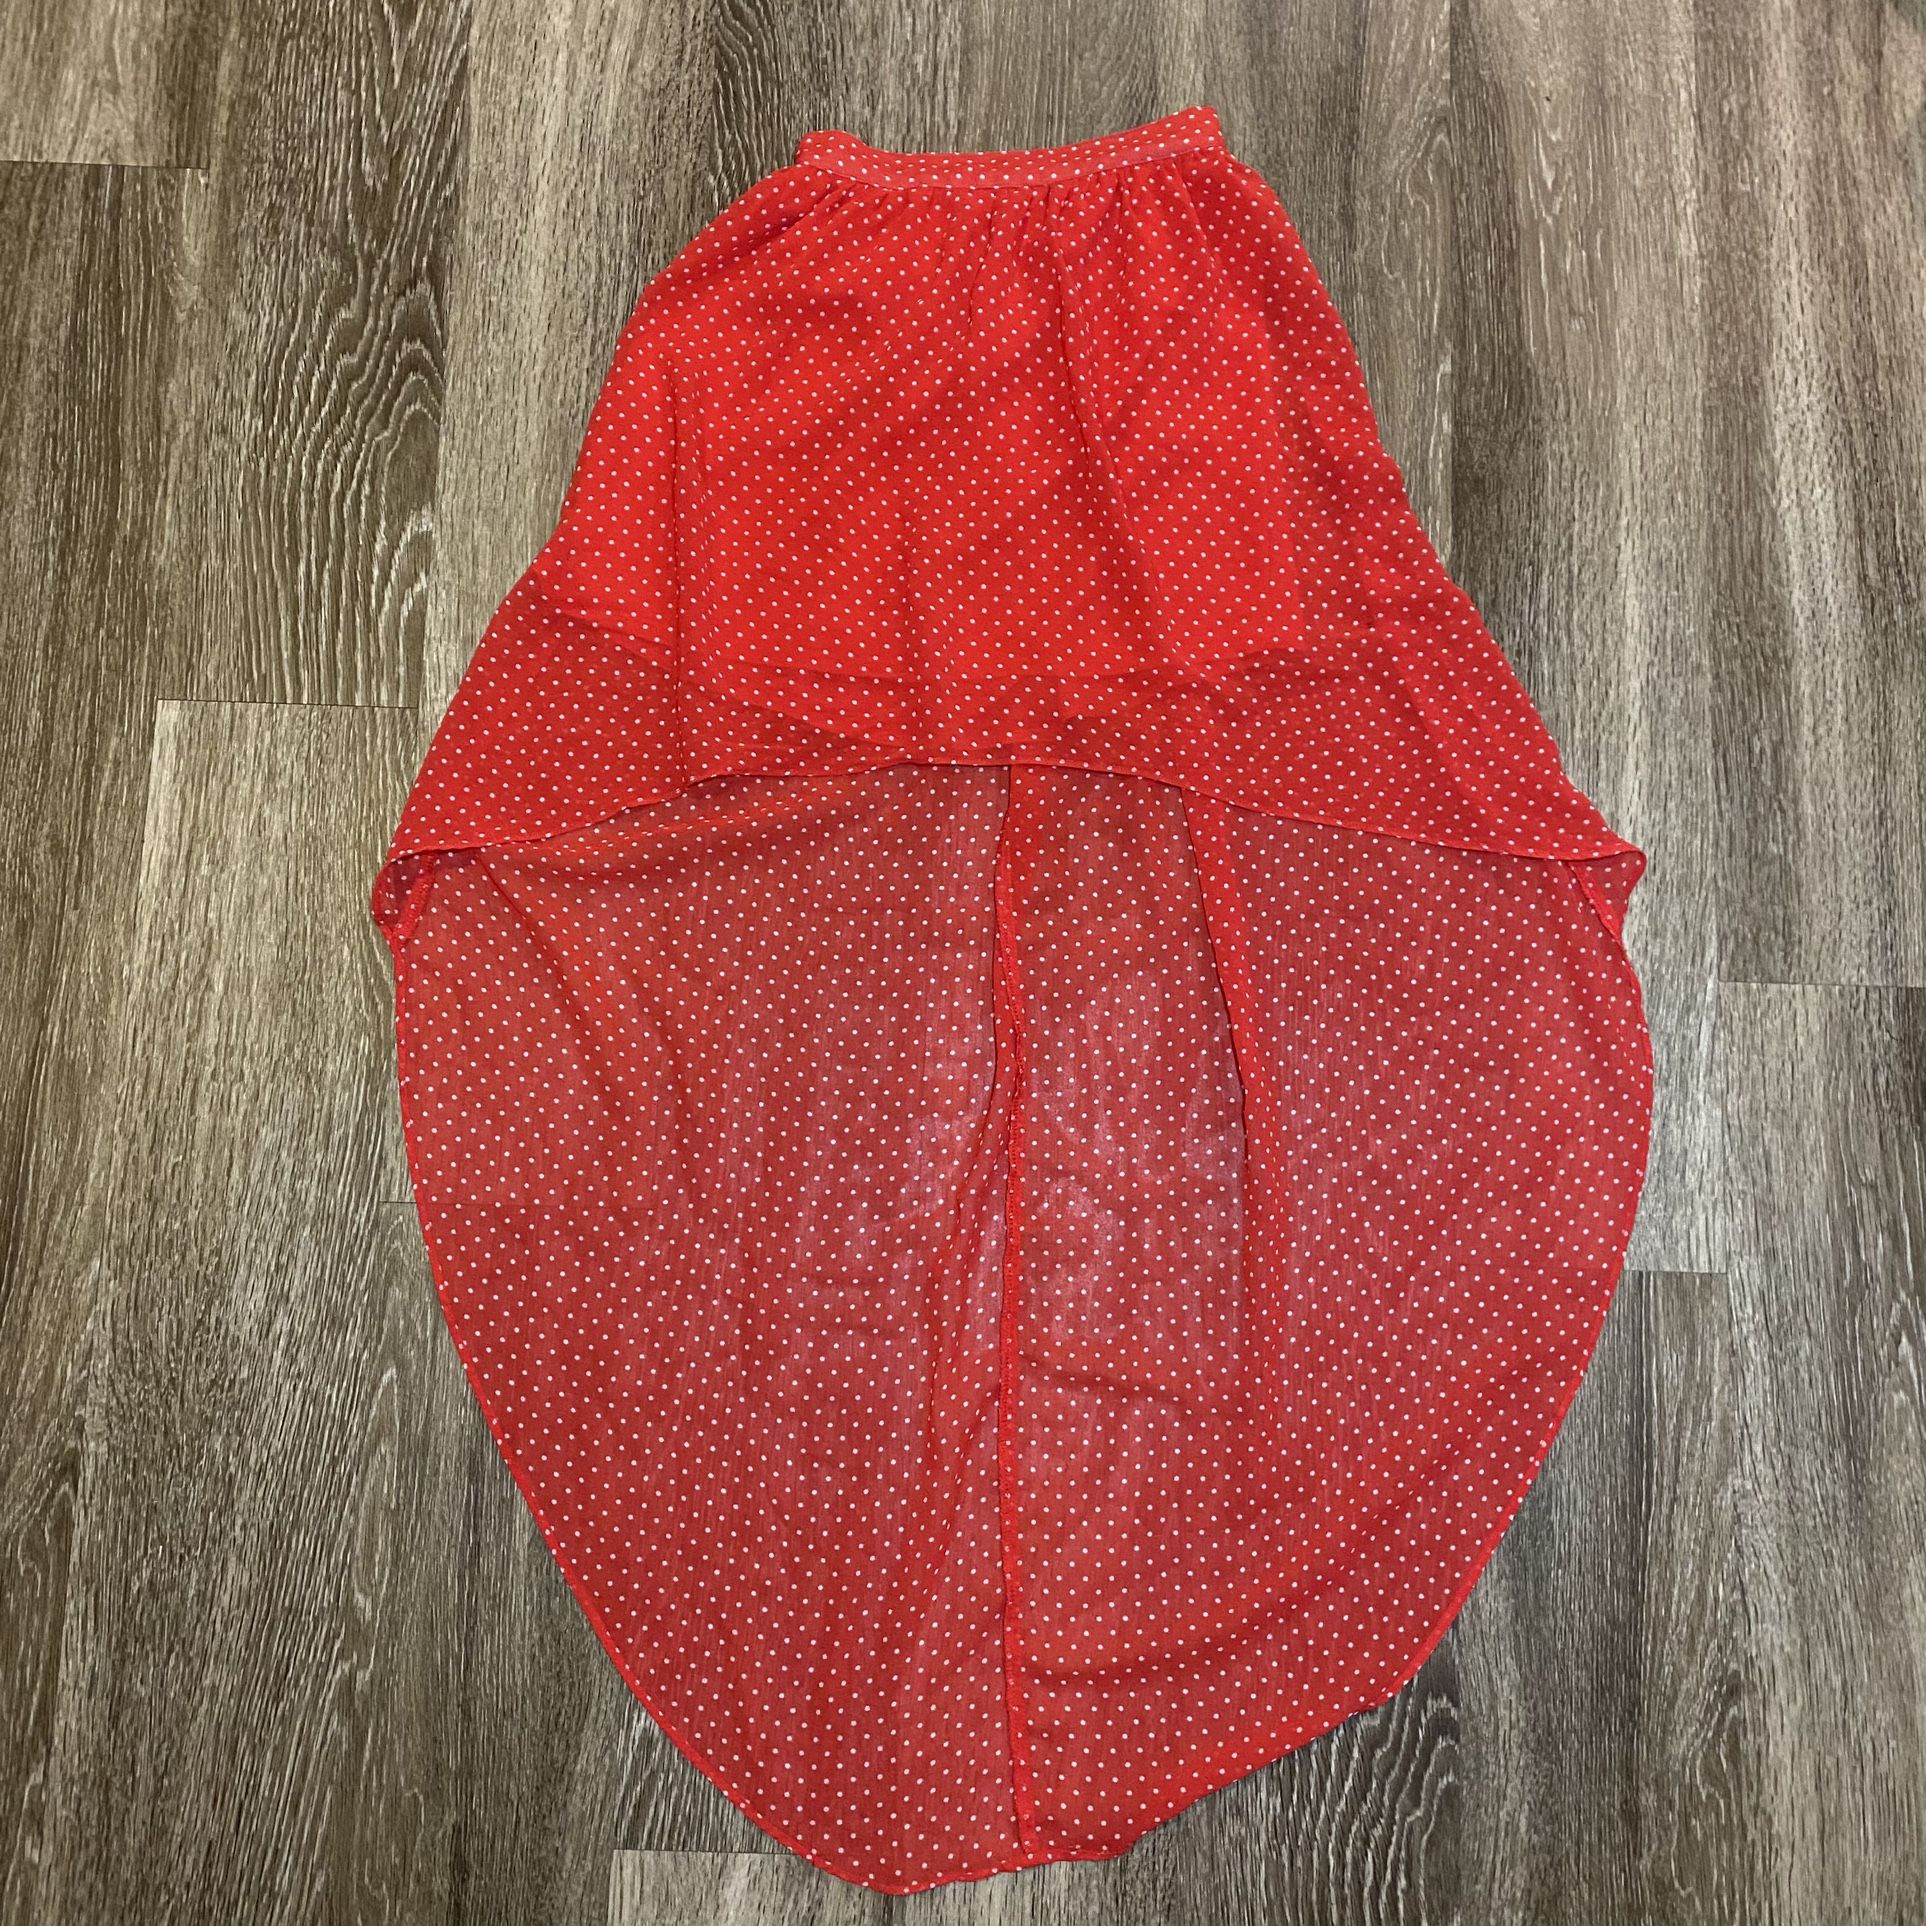 Red Polka Dot High-Low Skirt - XS